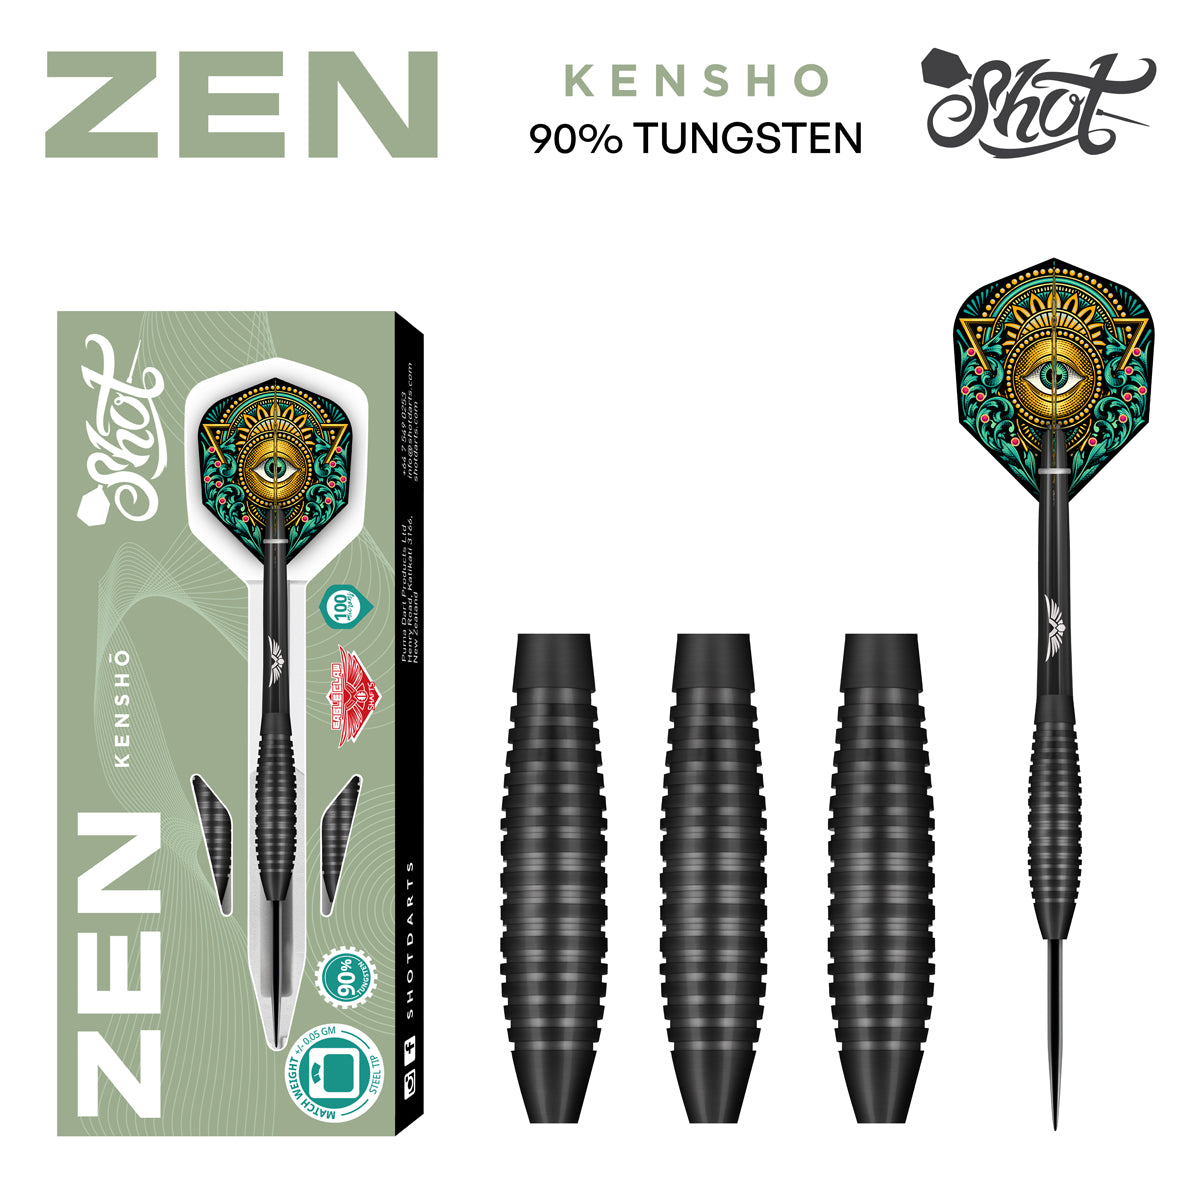 Shot Darts - Zen Kensho - 90% Tungsten - 22g